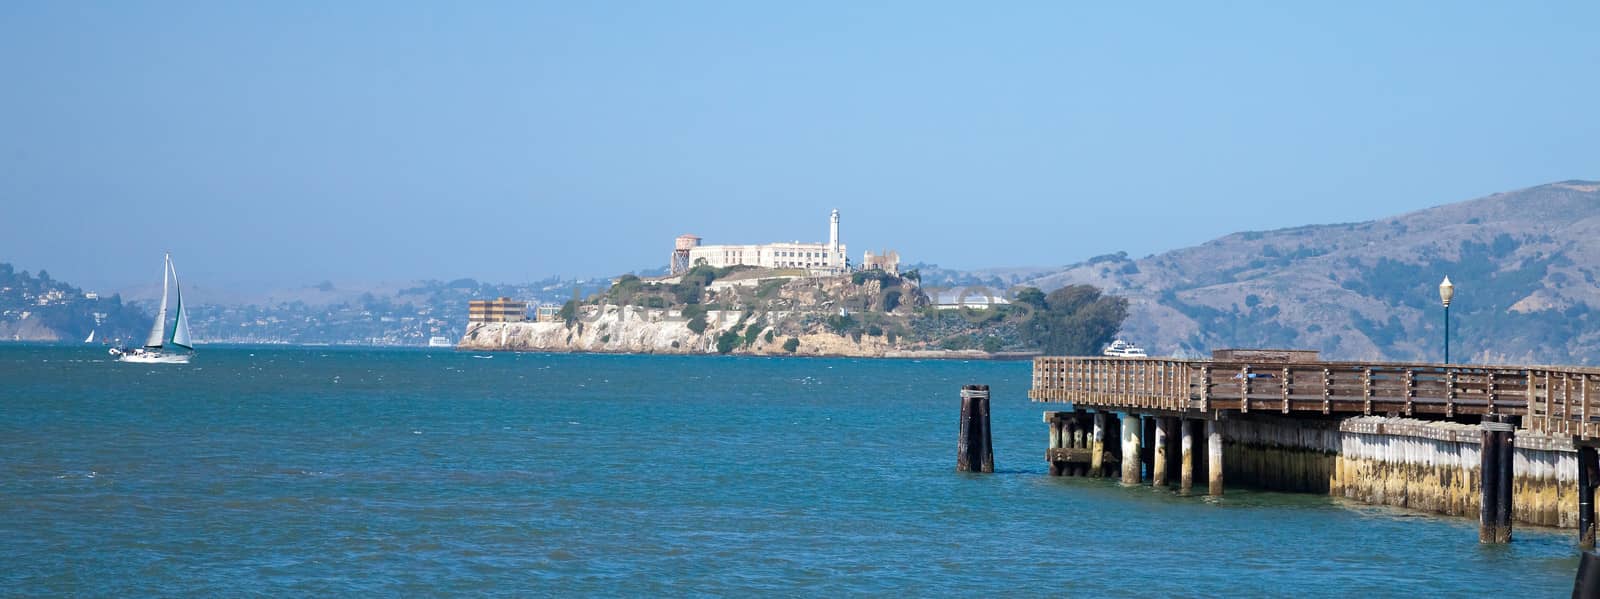 Alcatraz jail in San Francisco by hanusst